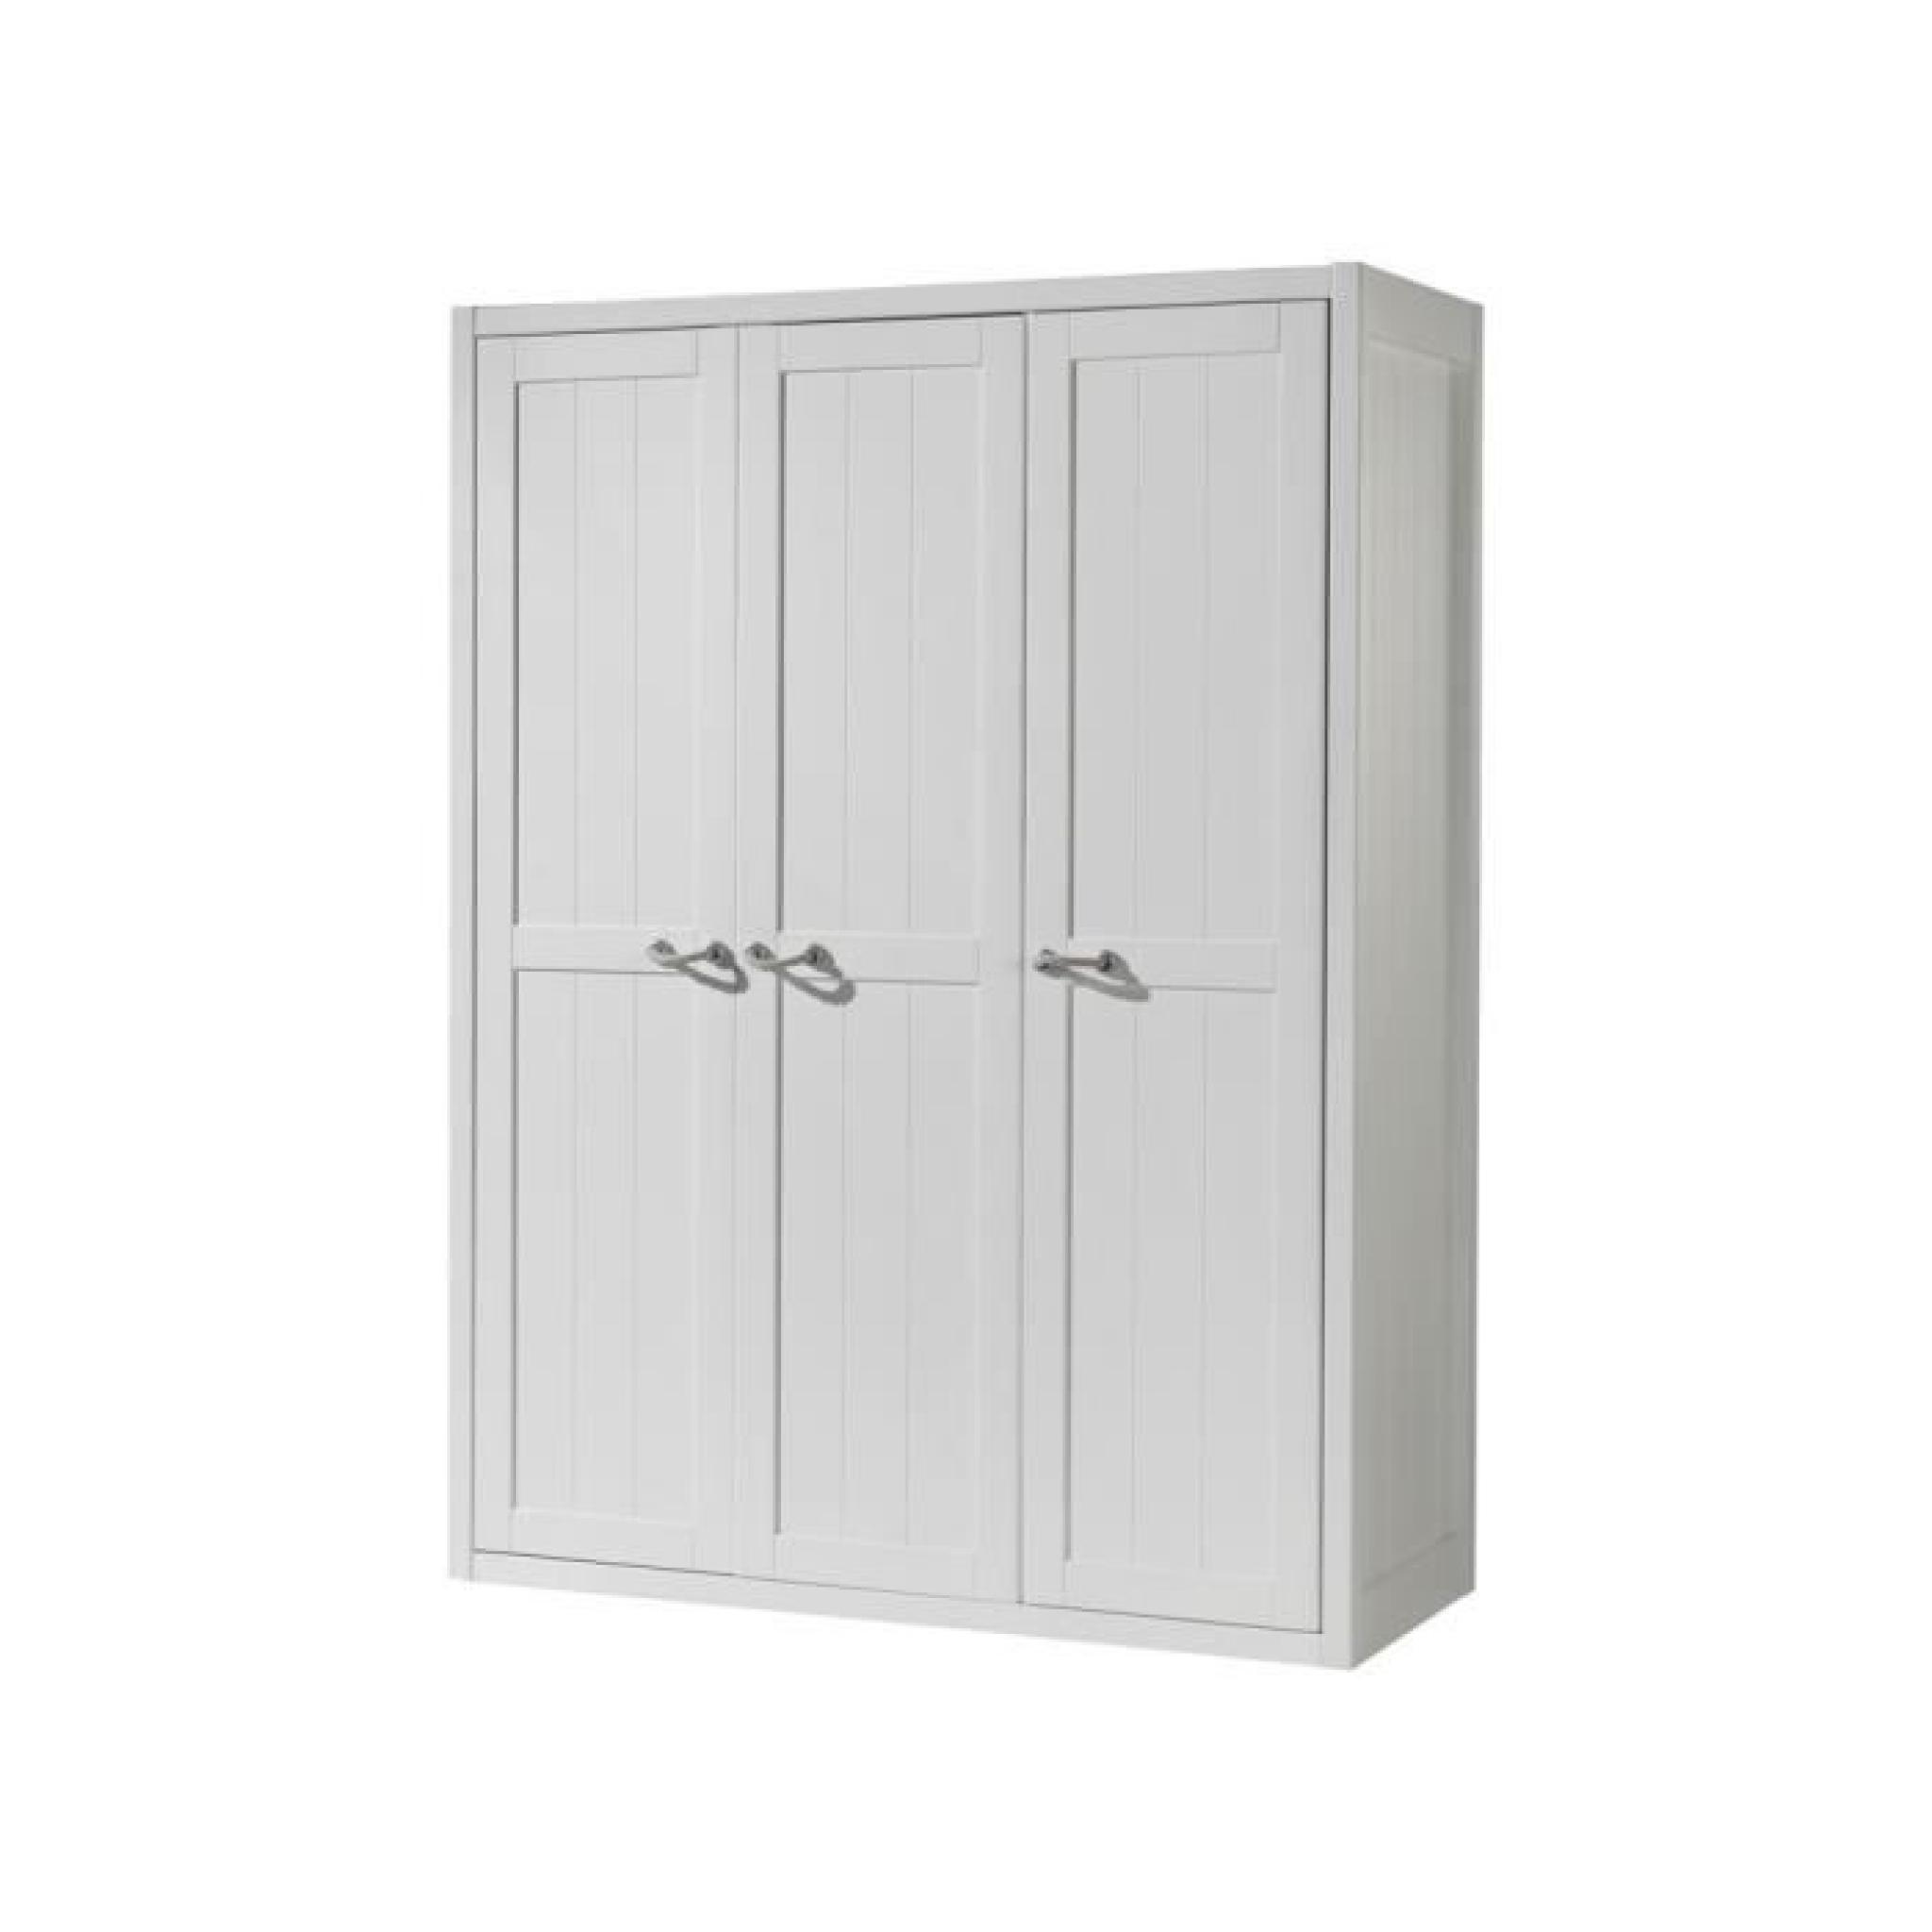 LEWIS Armoire 145cm 3 portes - Blanc